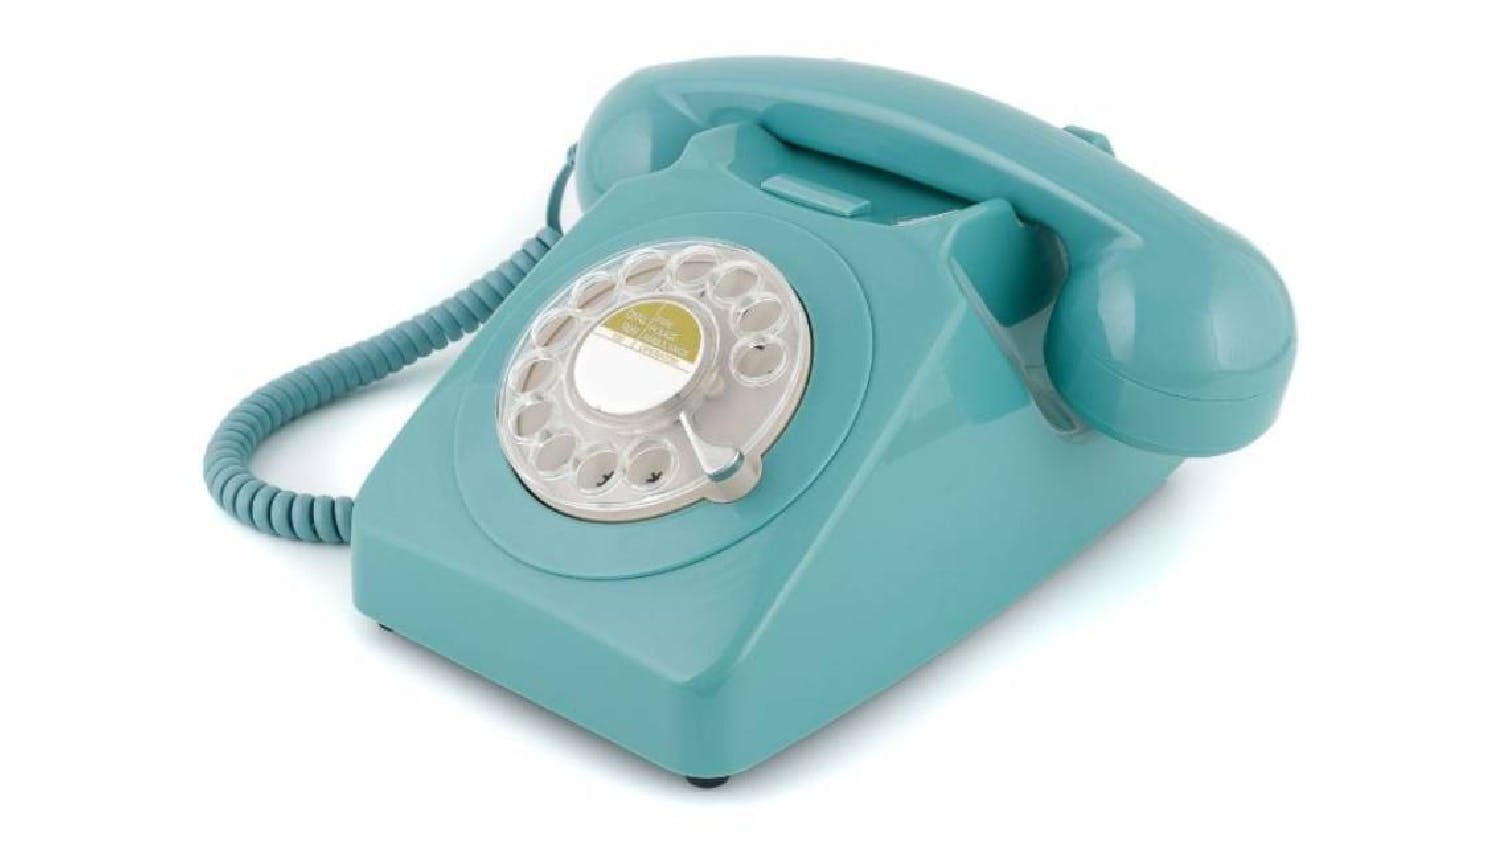 GPO 746 Rotary Corded Phone - Blue